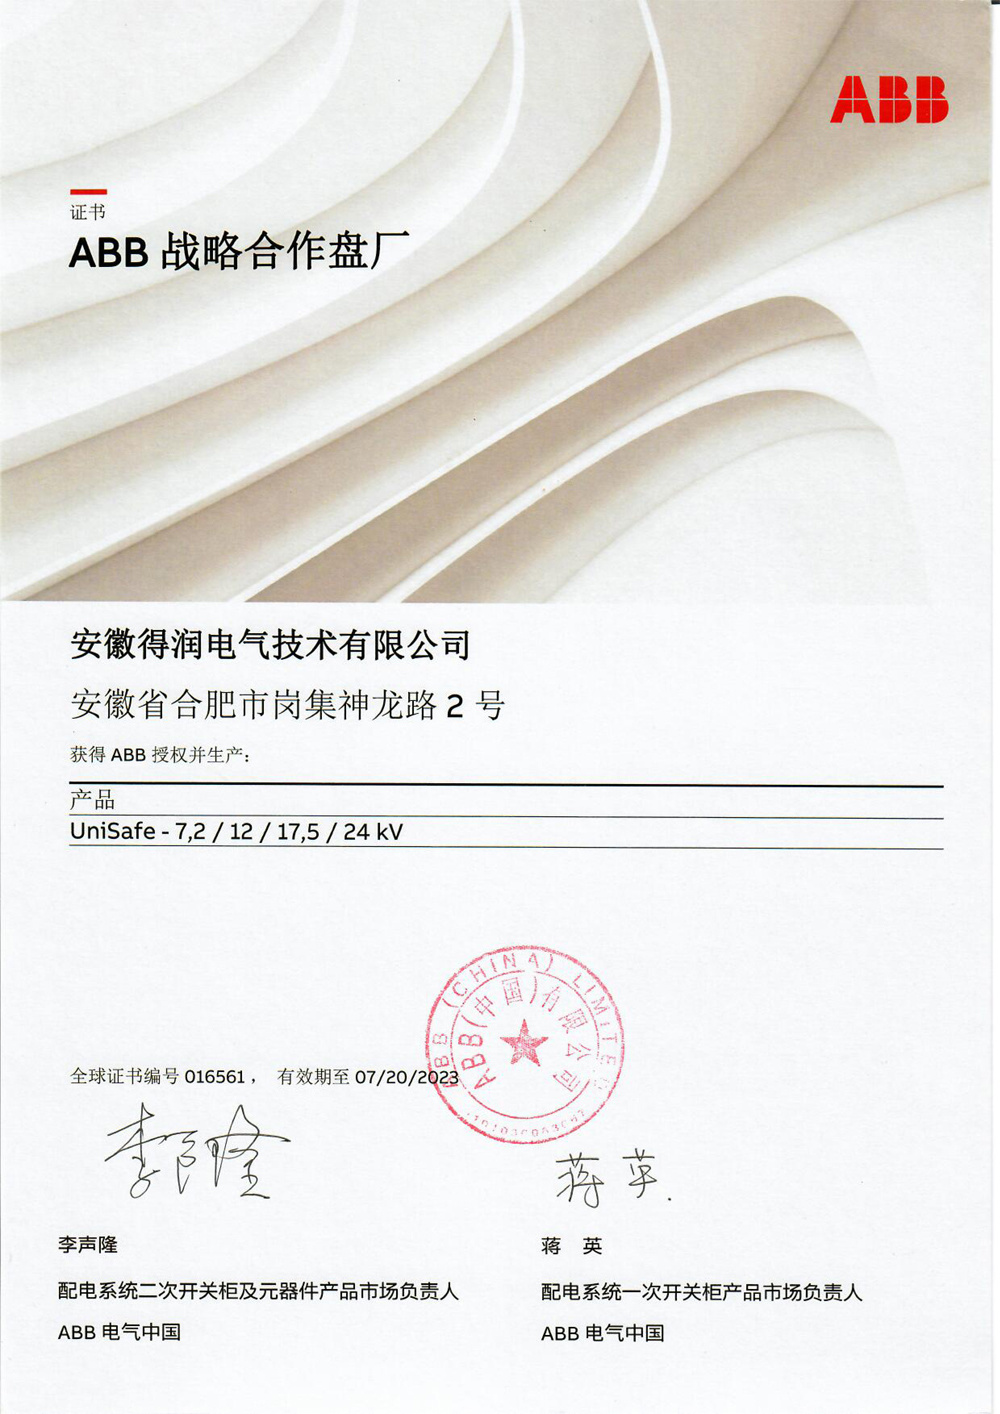 Unisafe authorization certificate